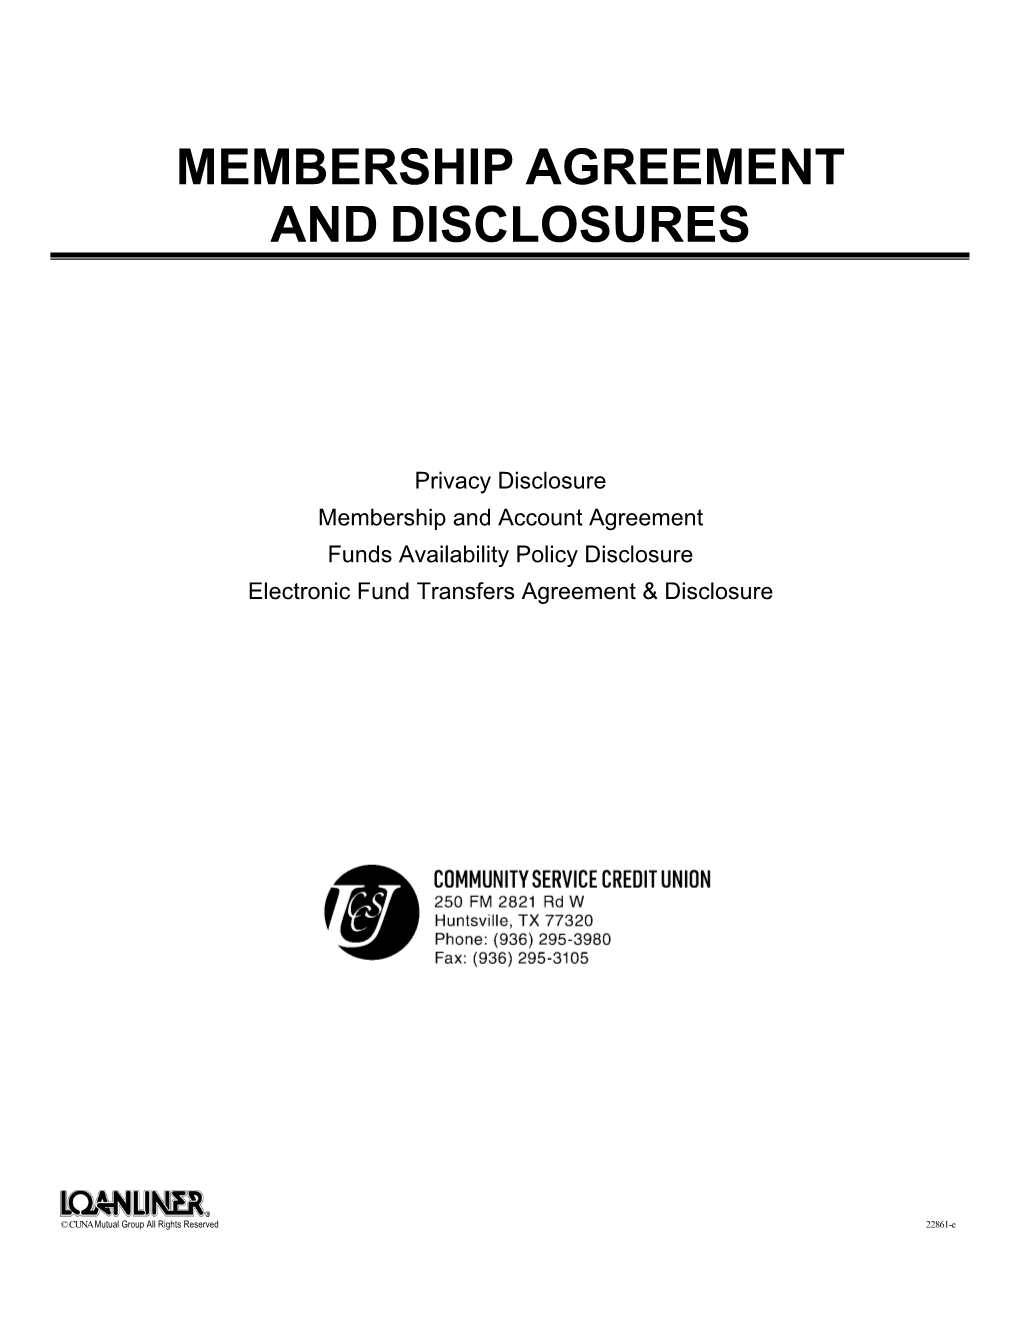 Membership Agreement and Disclosures